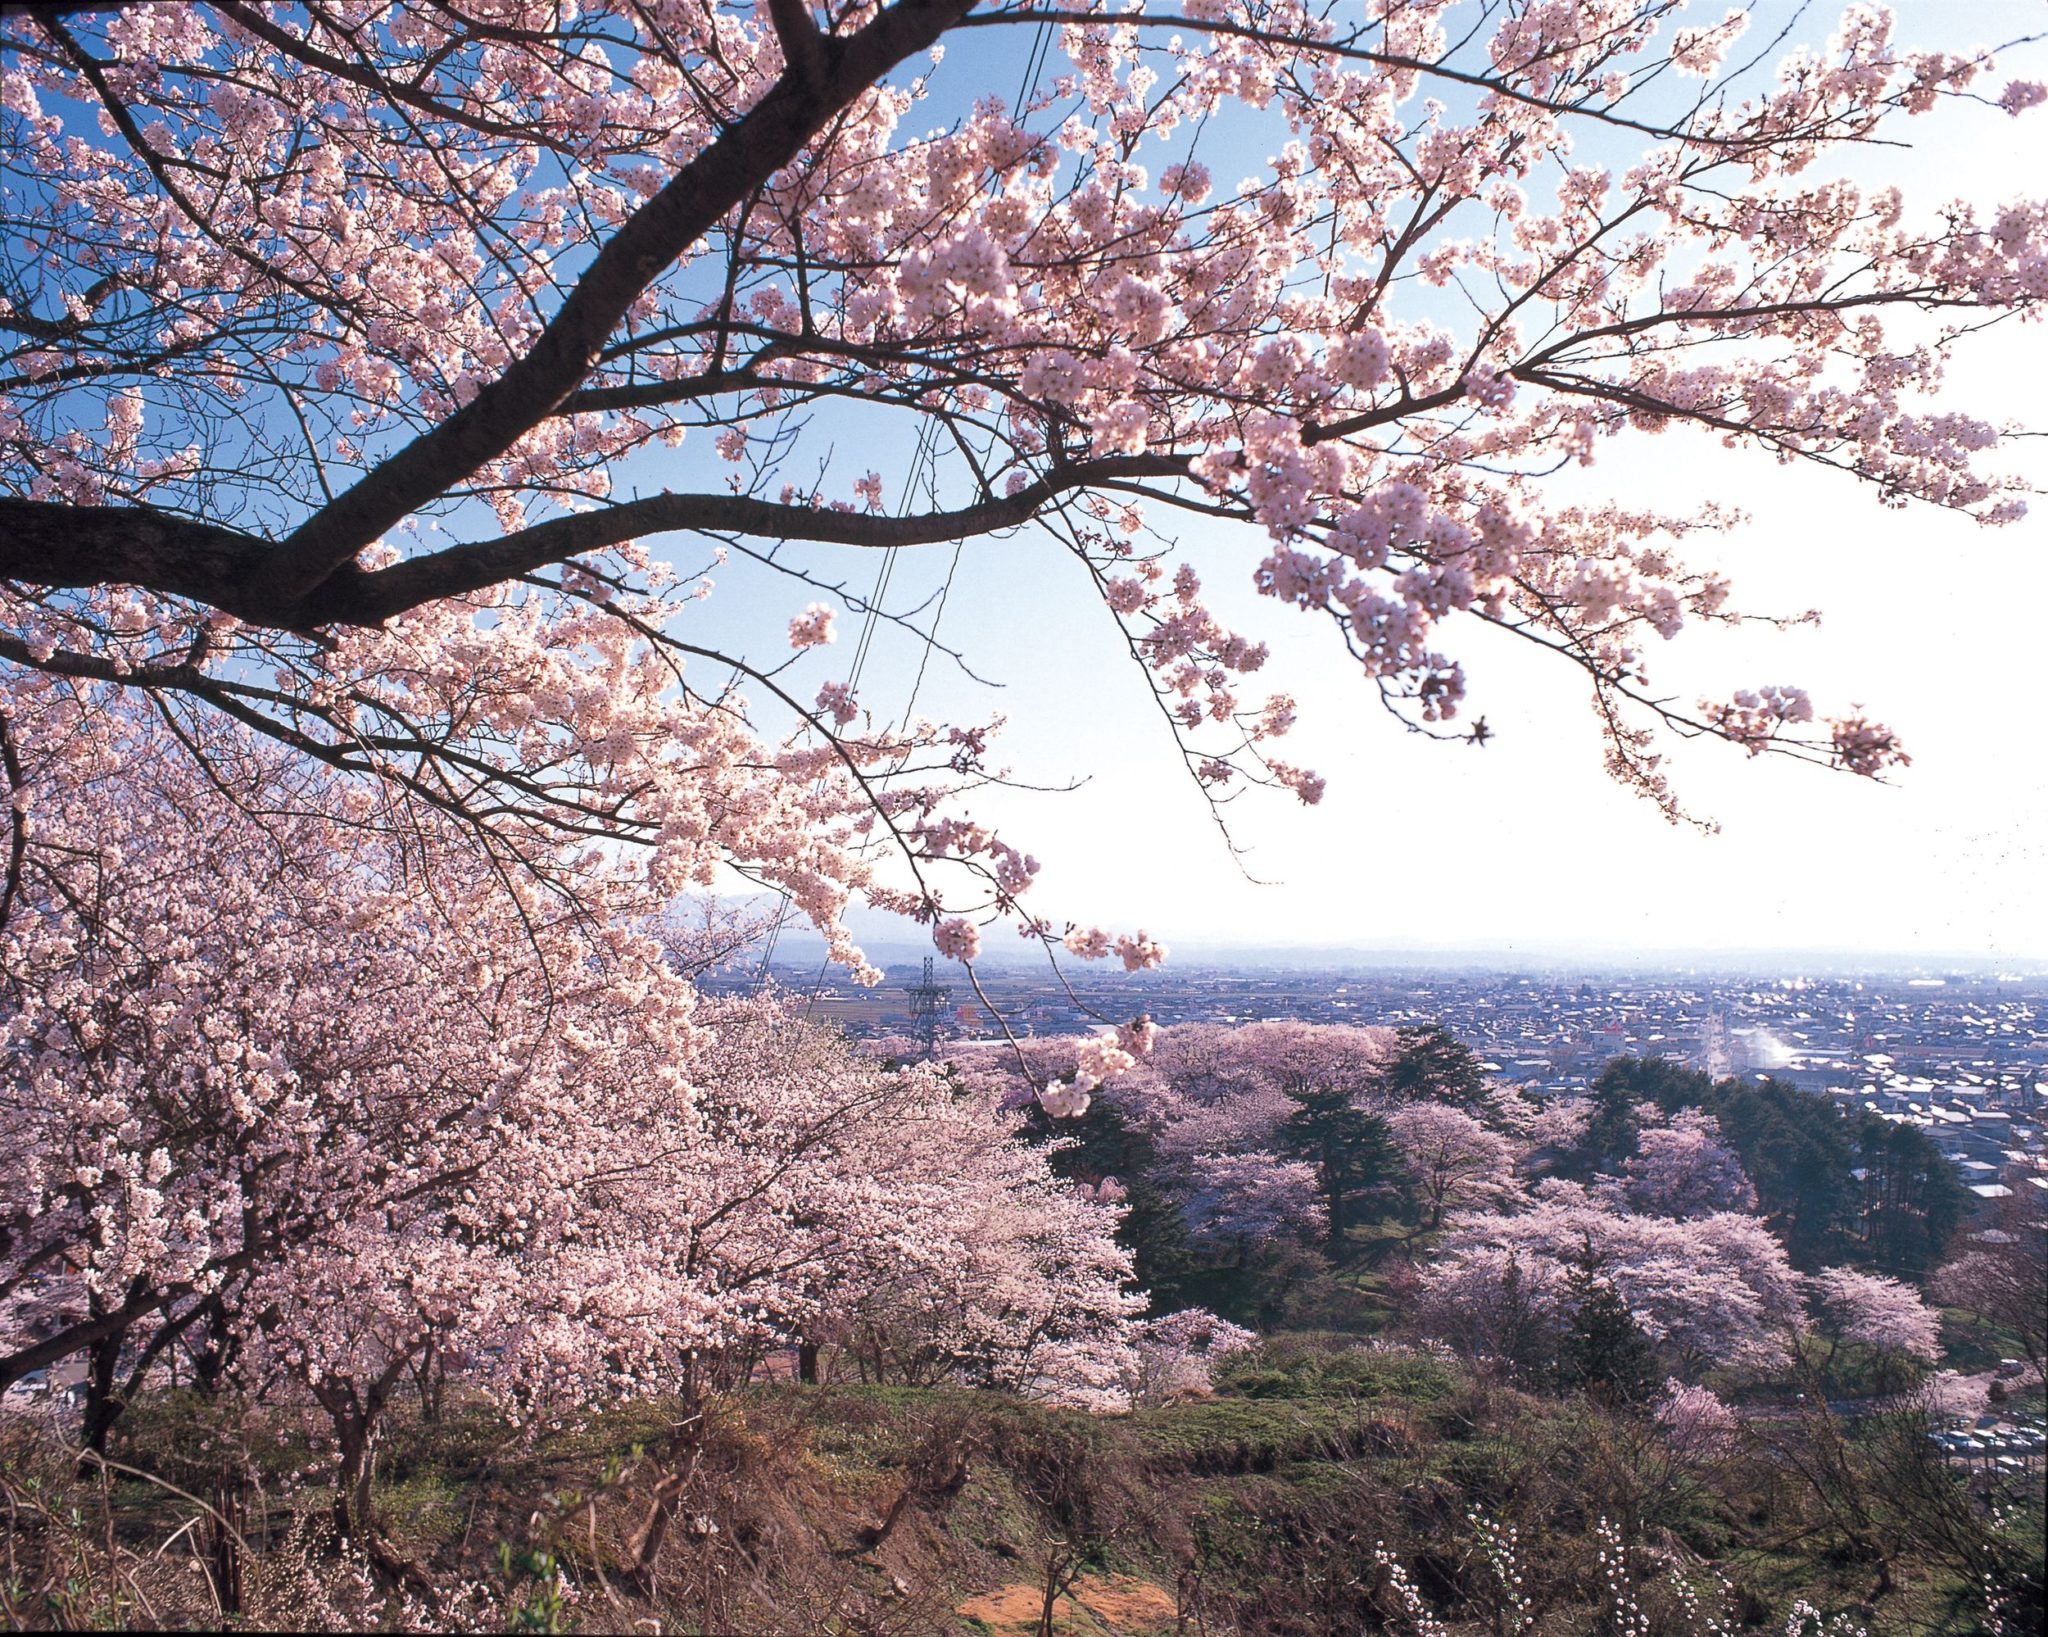 Cherry blossoms at Eboshiyama Park